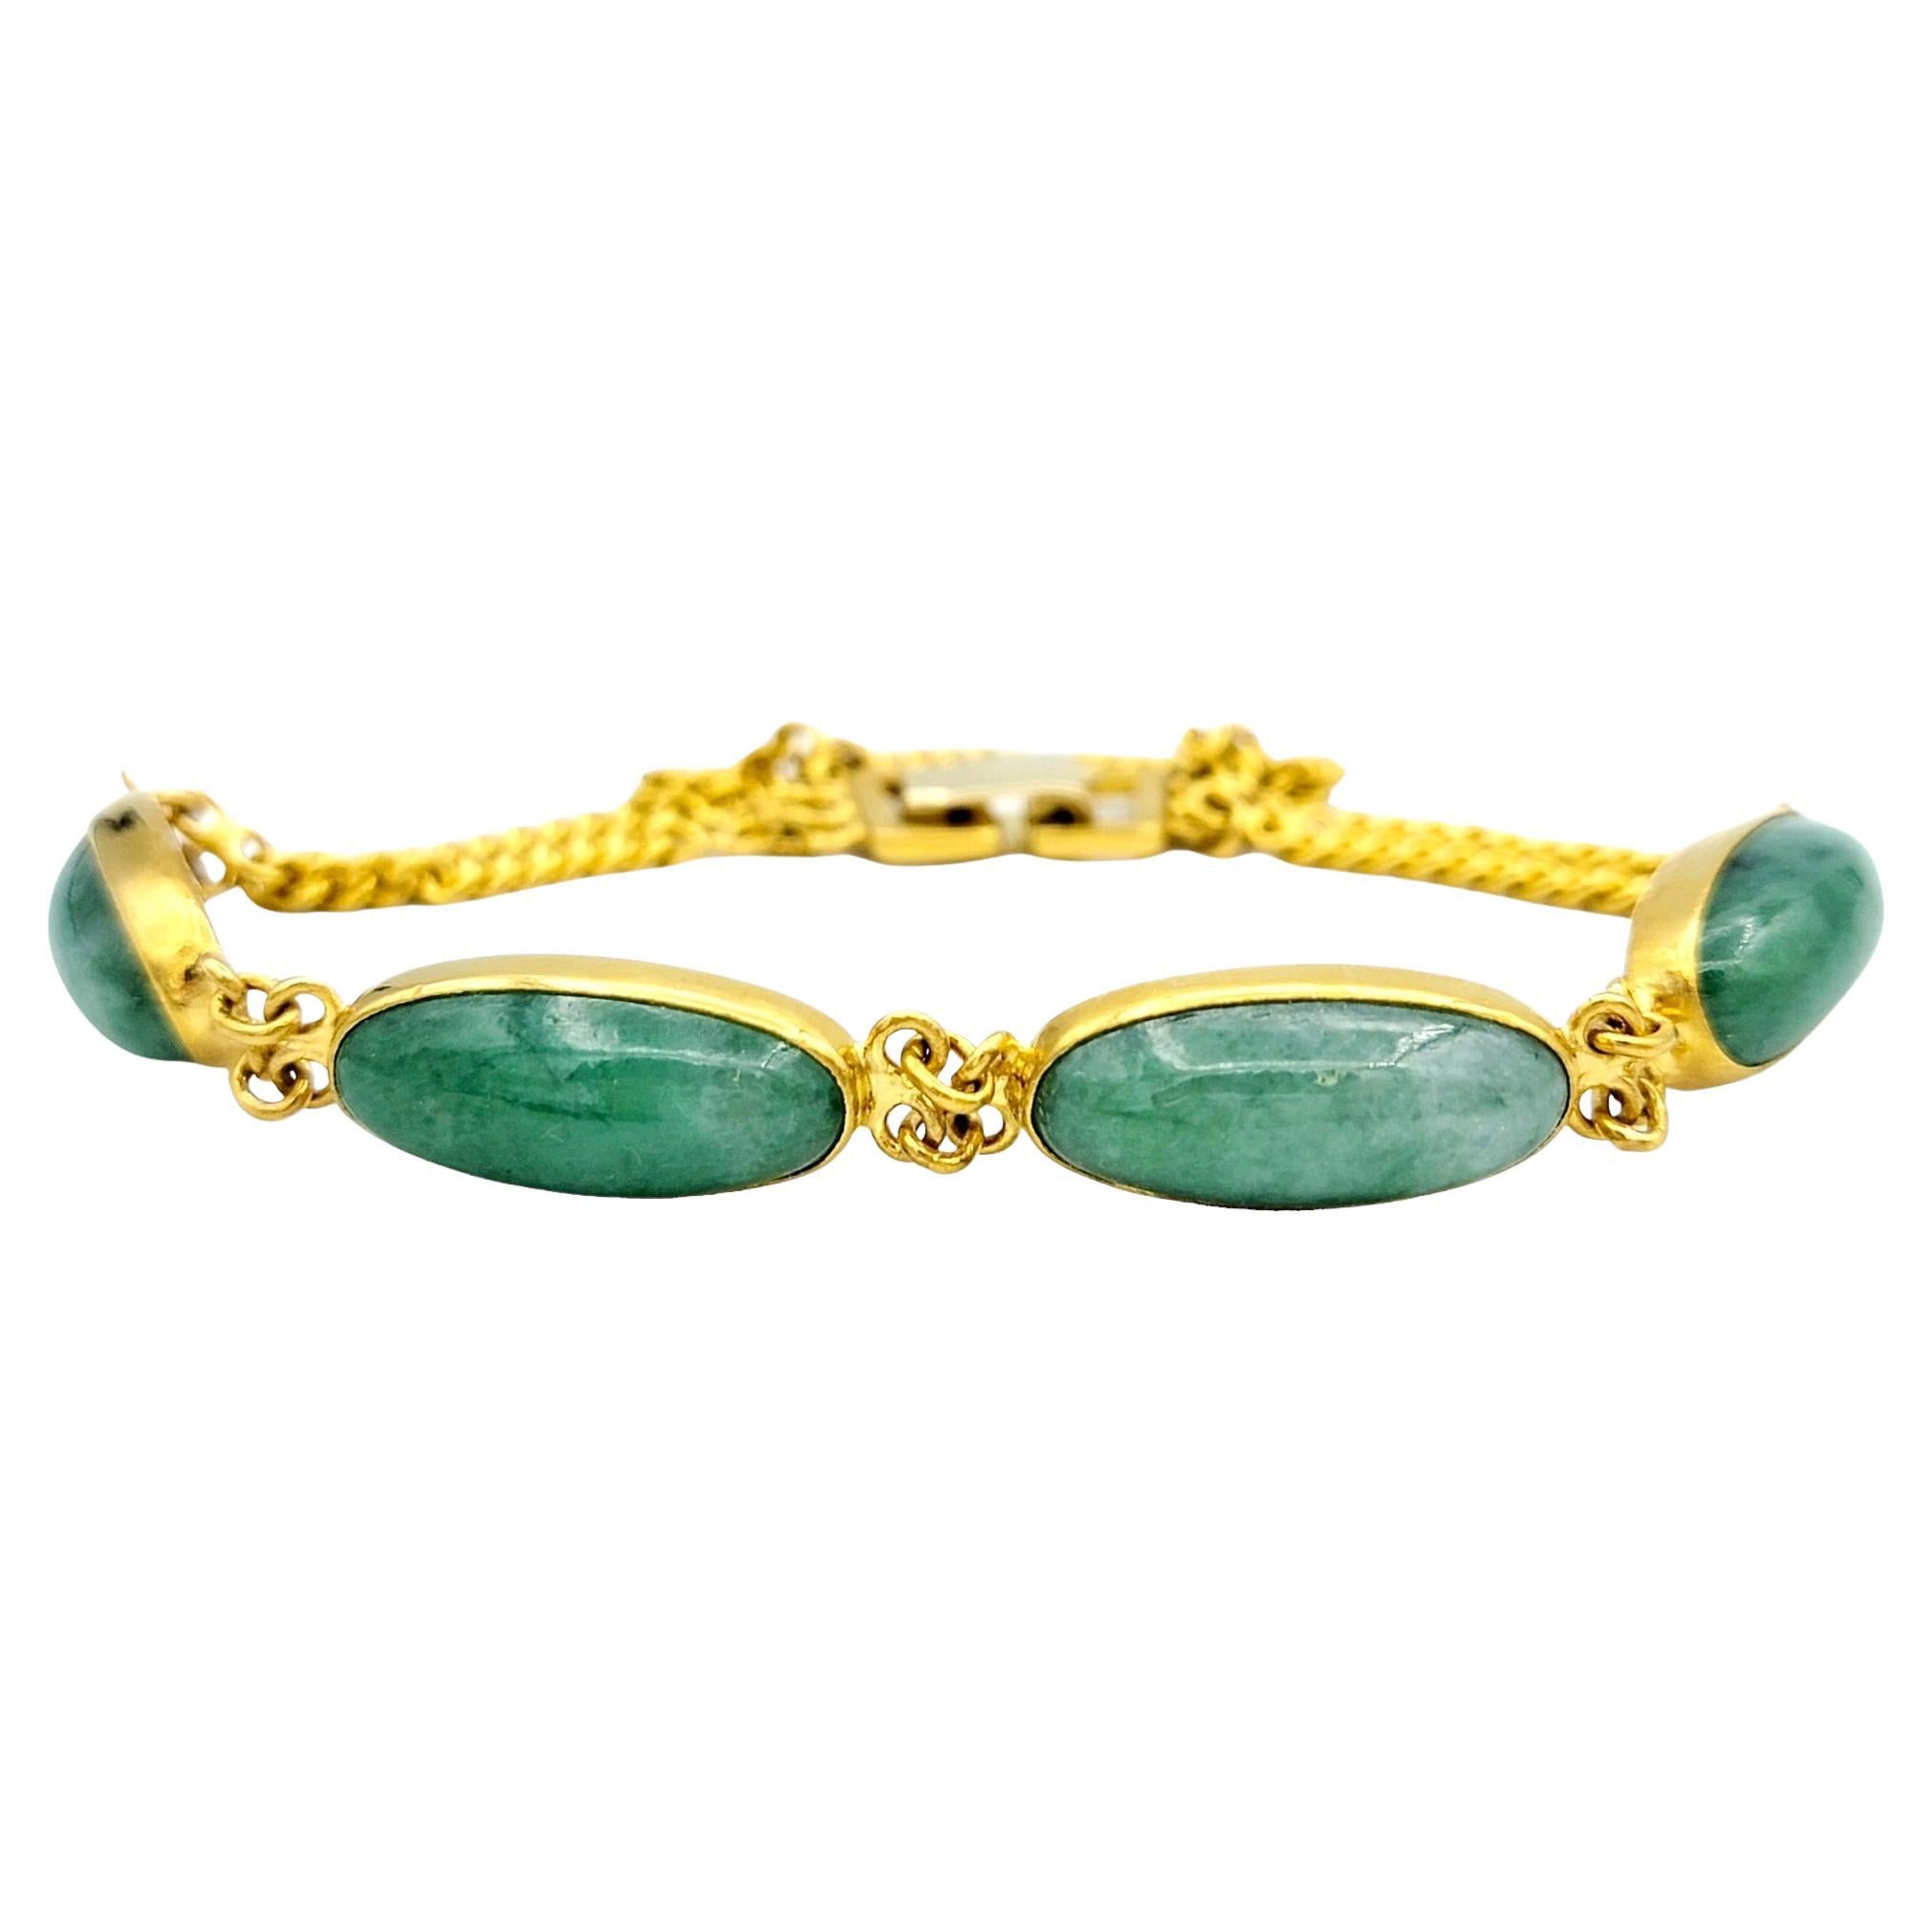 Elongated Oval Cabochon Jadeite Curb Link Bracelet Set in 24 Karat Yellow Gold 